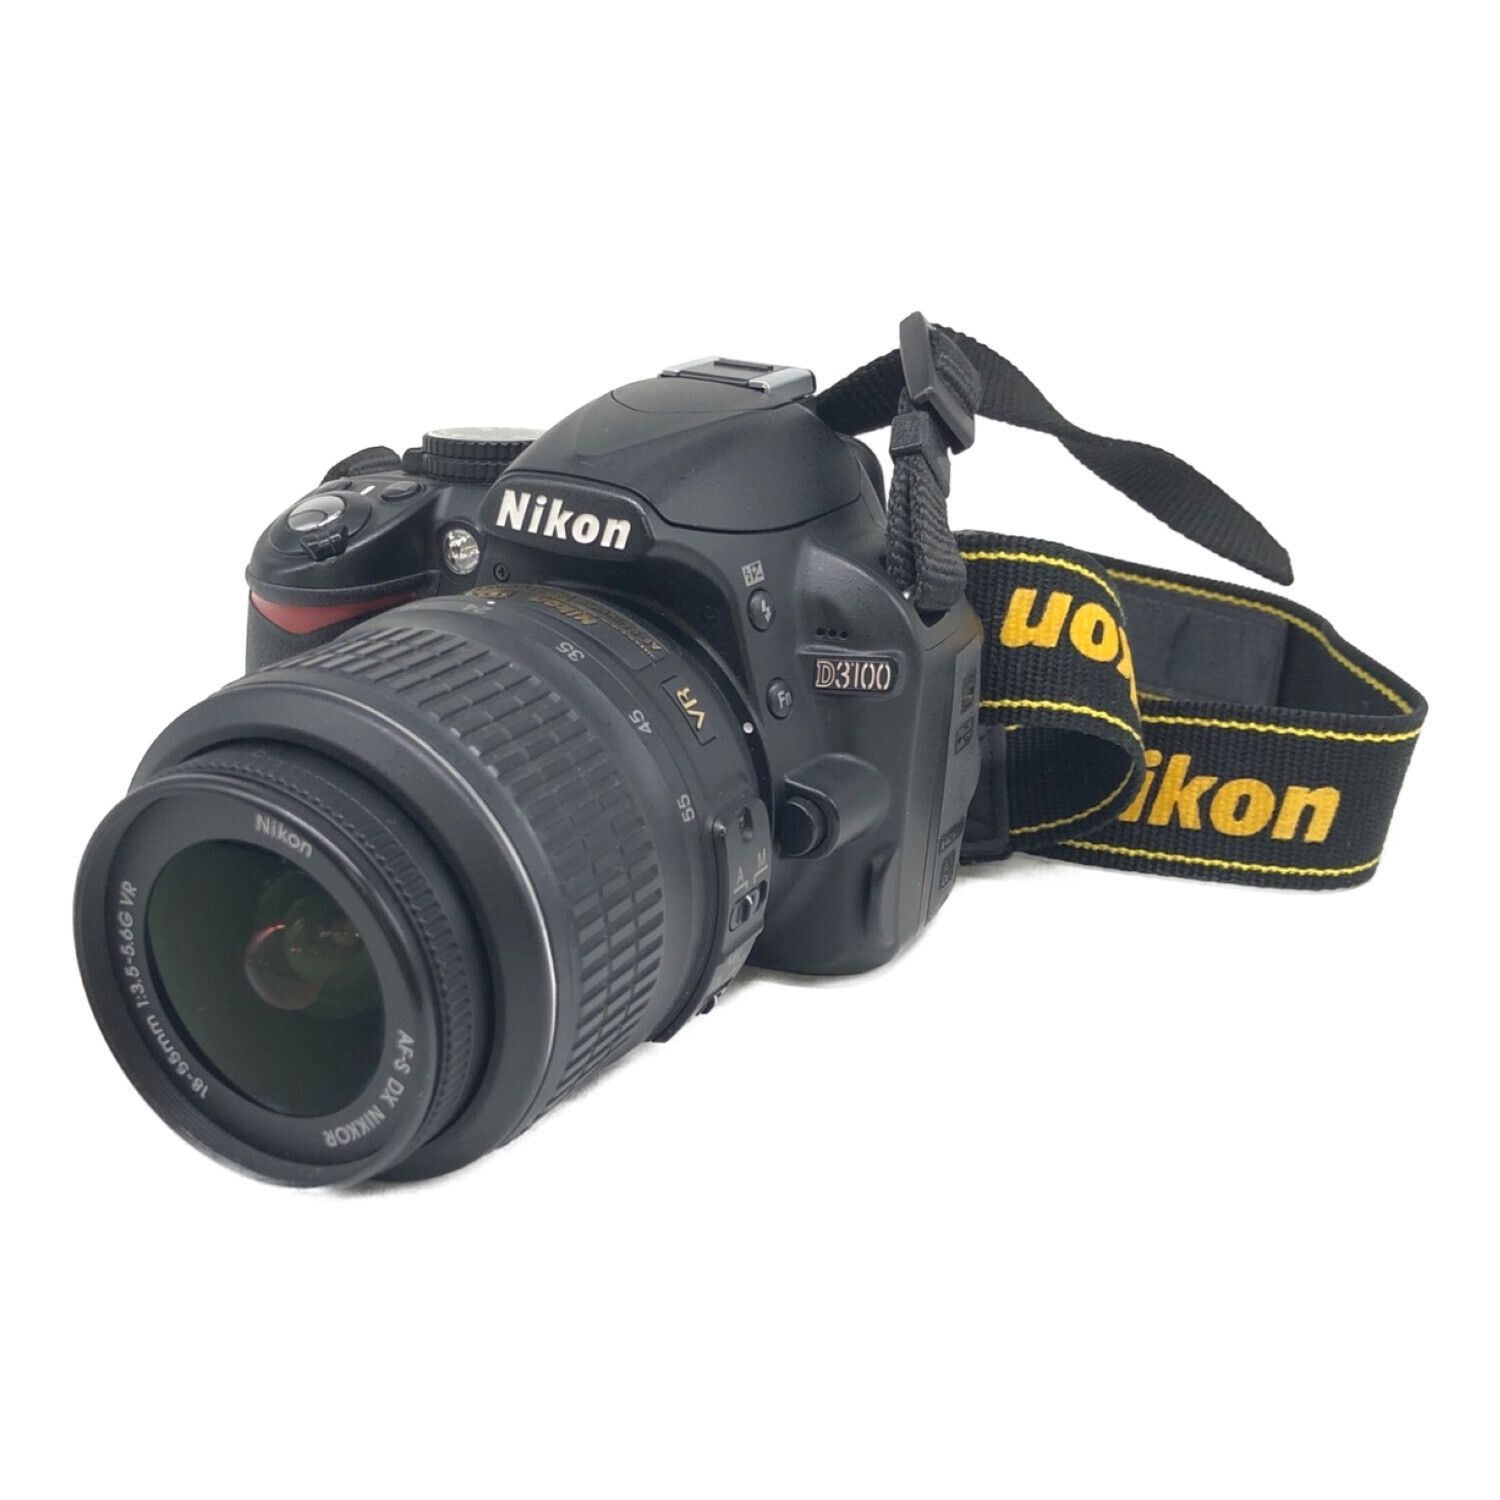 Nikon (ニコン) デジタル一眼レフカメラ D3100 1420万画素(有効